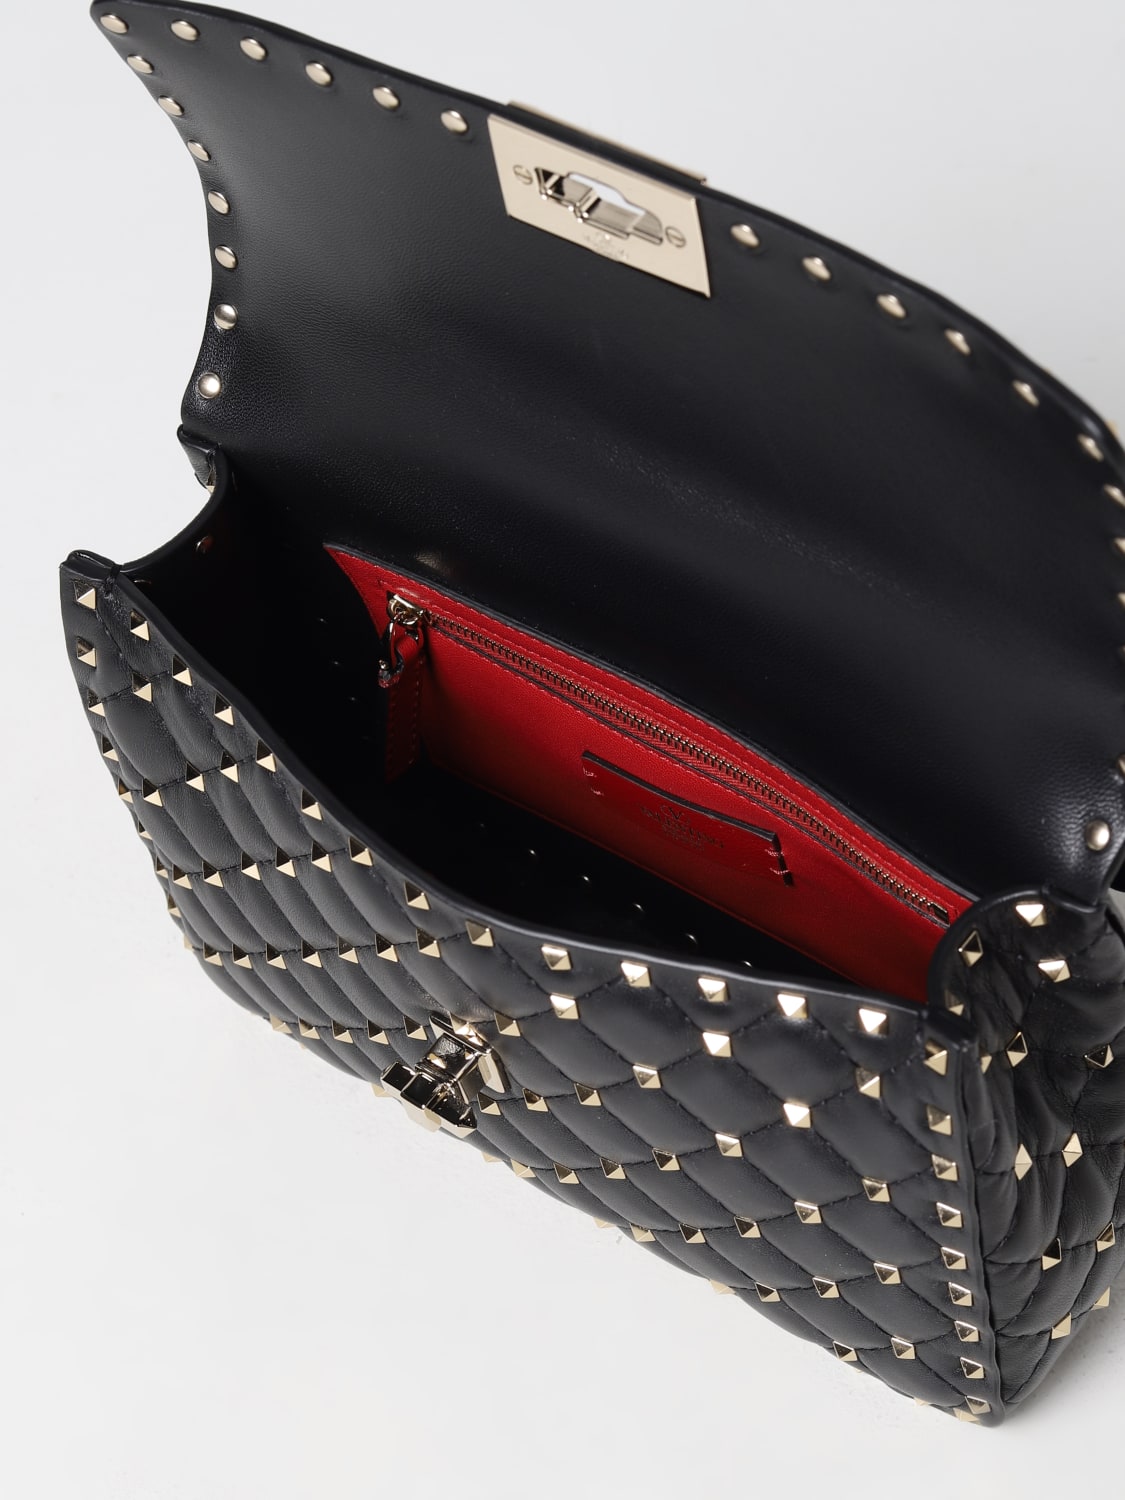 Rockstud spike patent leather backpack Valentino Garavani Red in